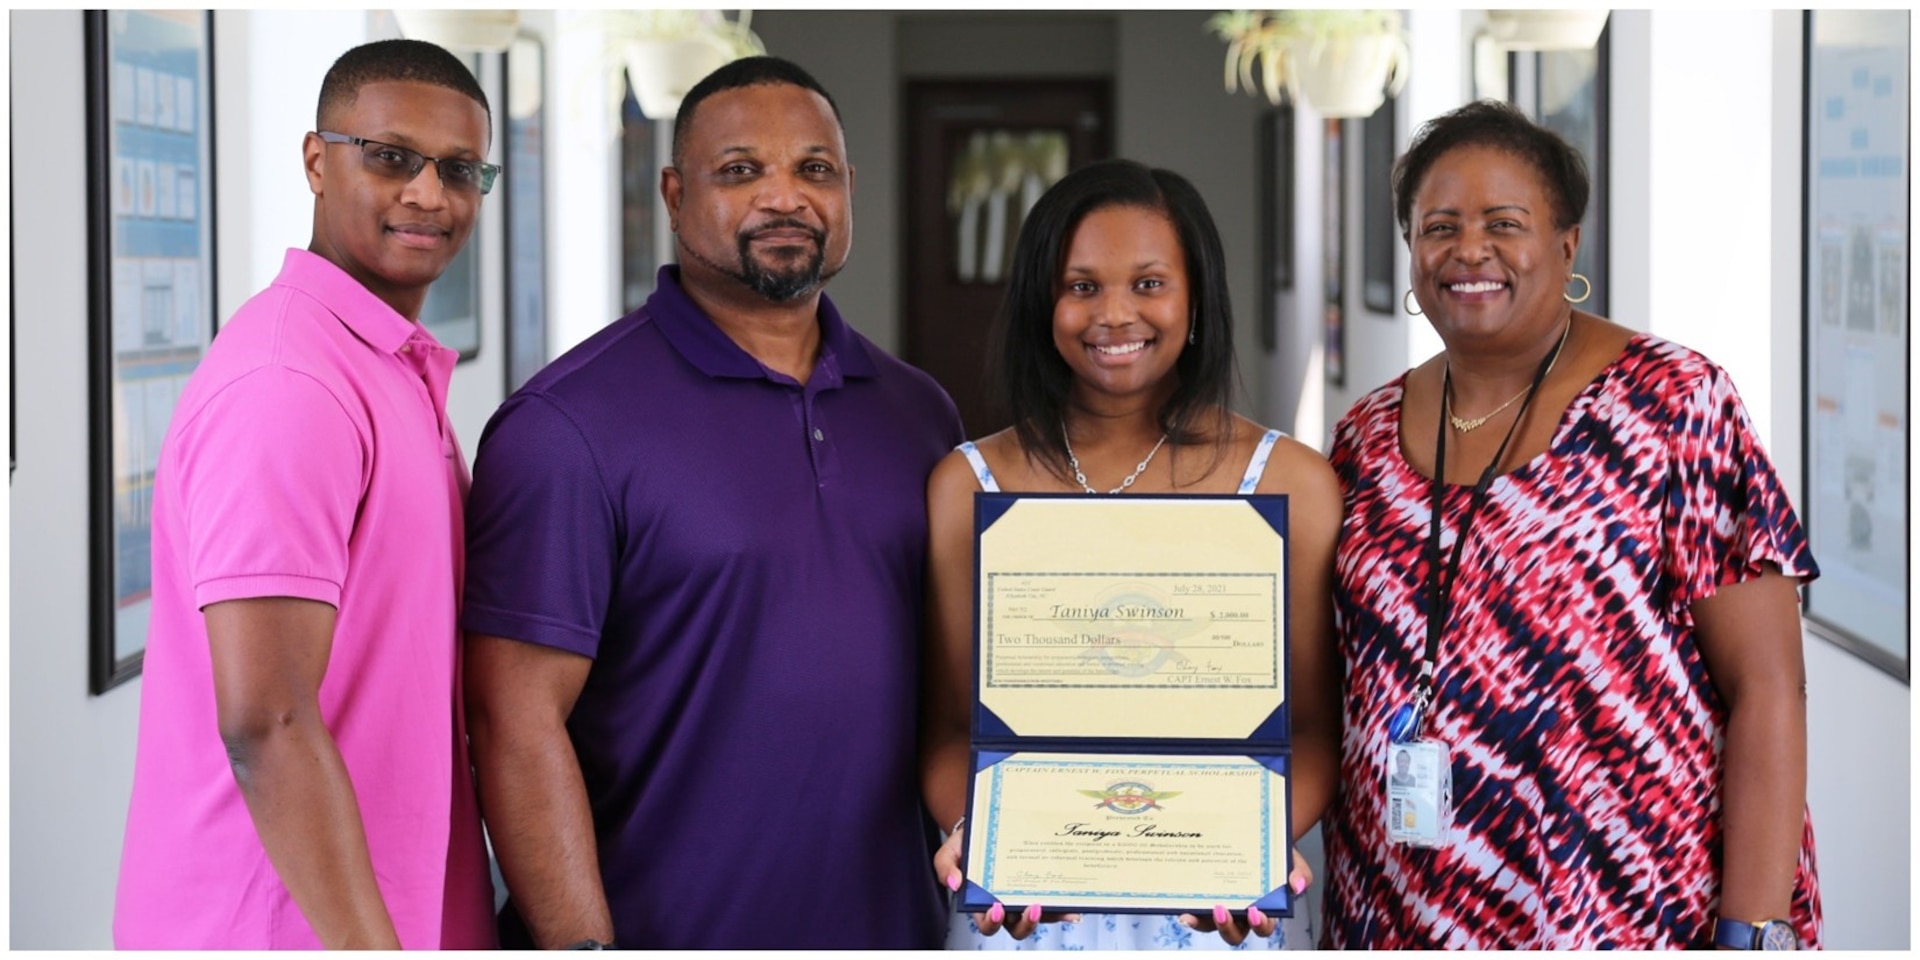 Taniya Swinson and family, the 2021 Capt. Ernest Fox Scholarship recipient.